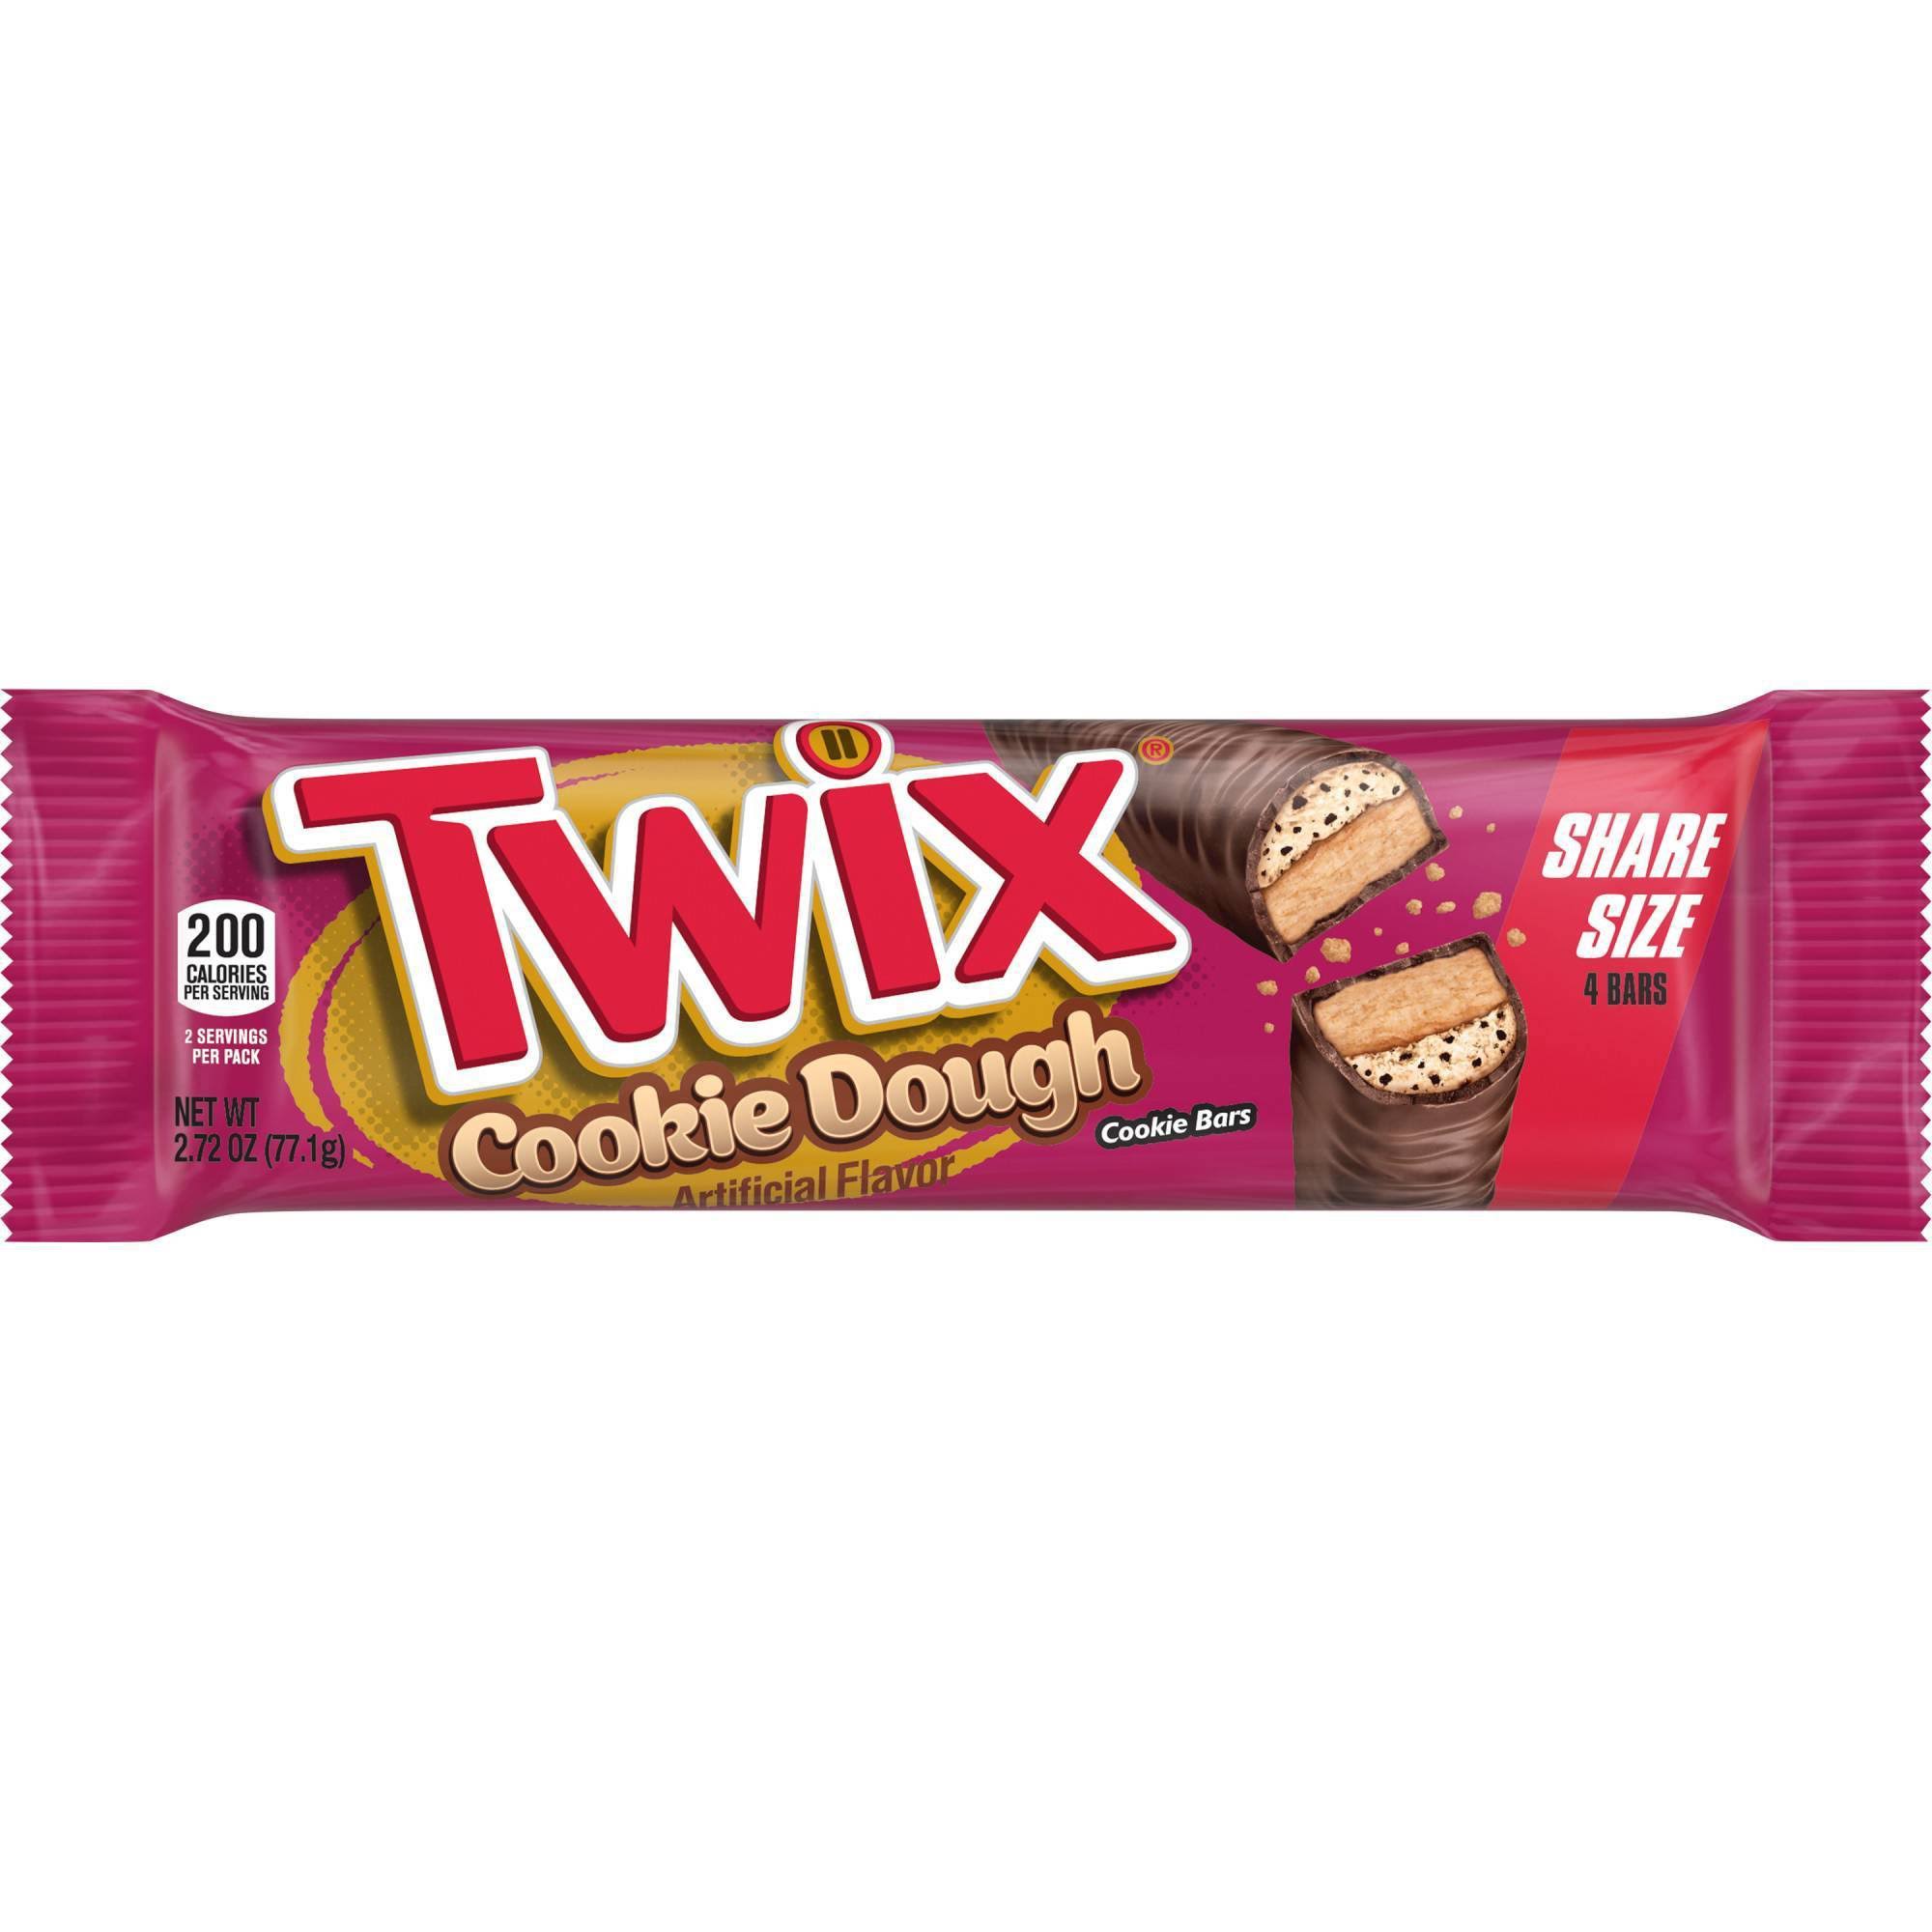 Twix Cookie Dough Share Size - 2.72oz